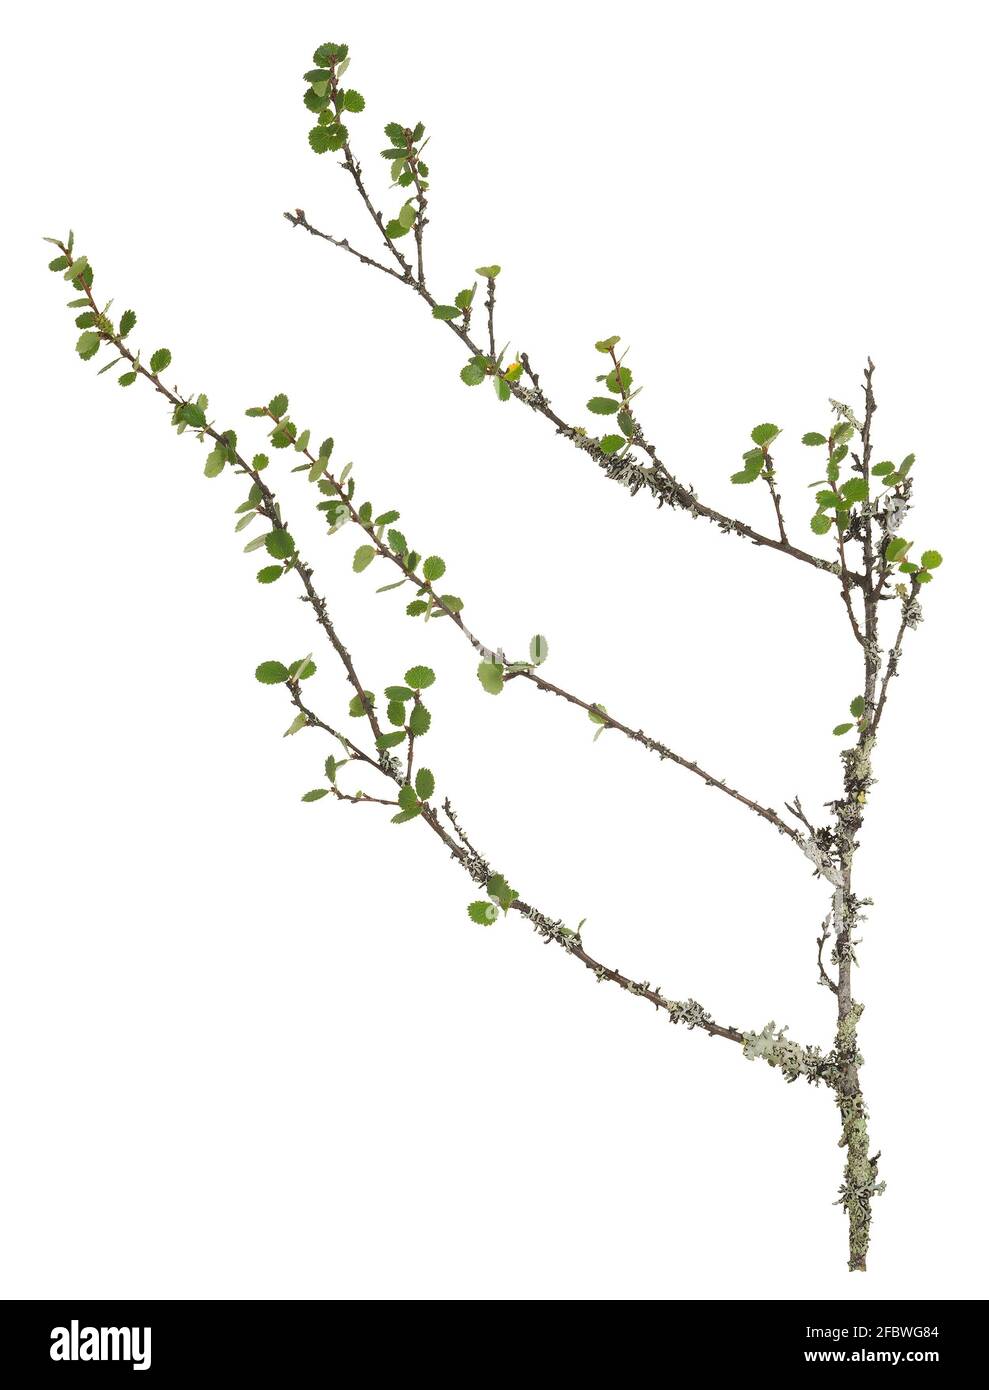 Dwarf birch, Betula nana twig with leafs isolated on white background Stock Photo